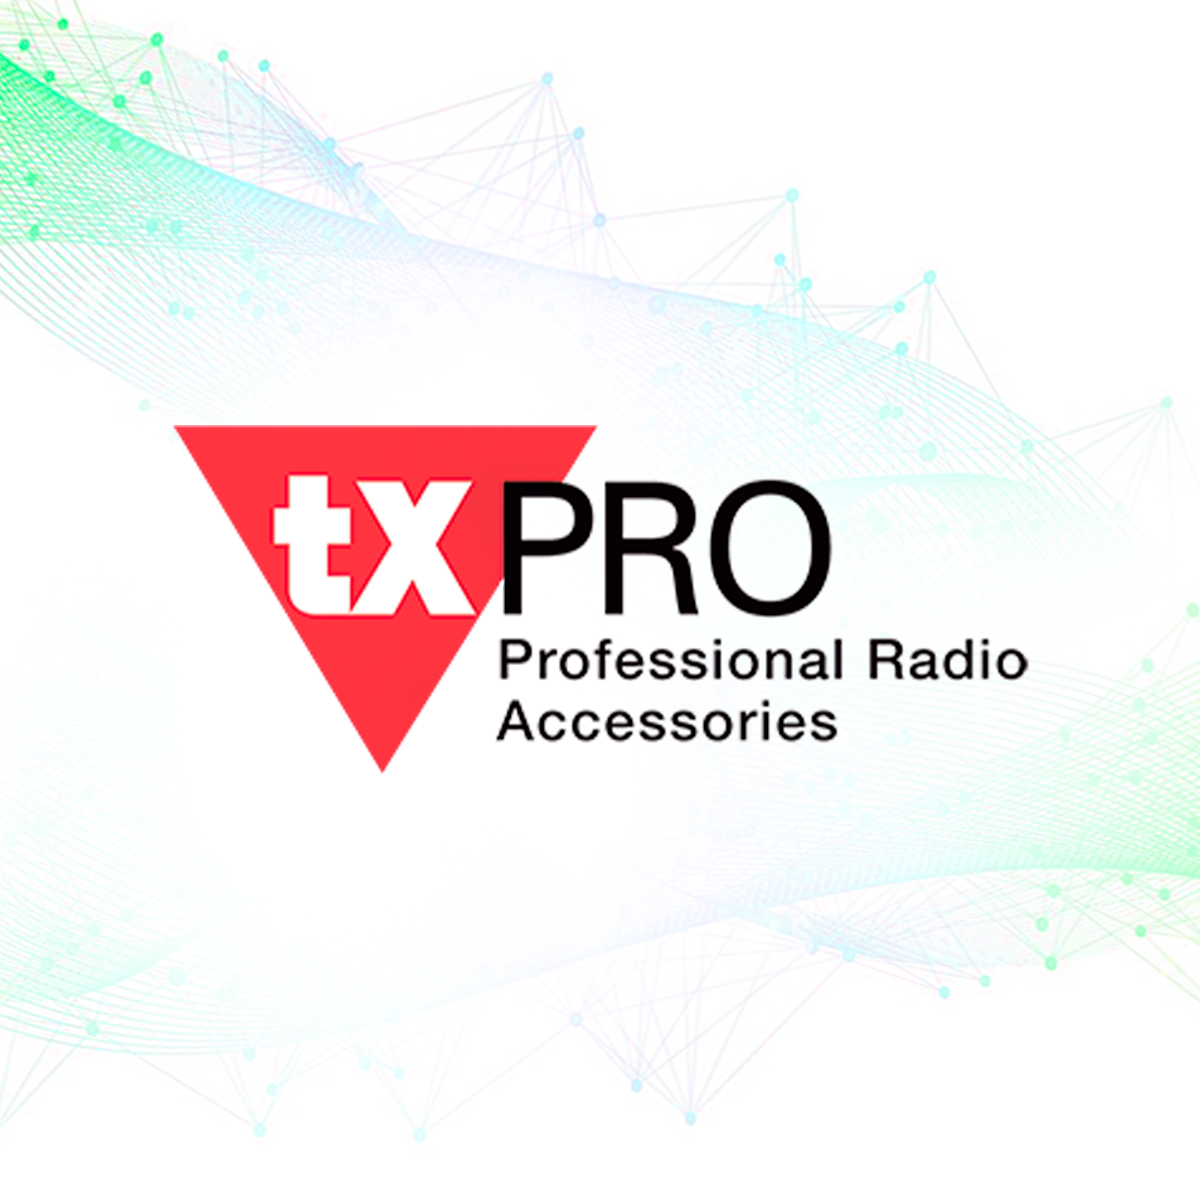 TX Pro Professional Radio Accesories